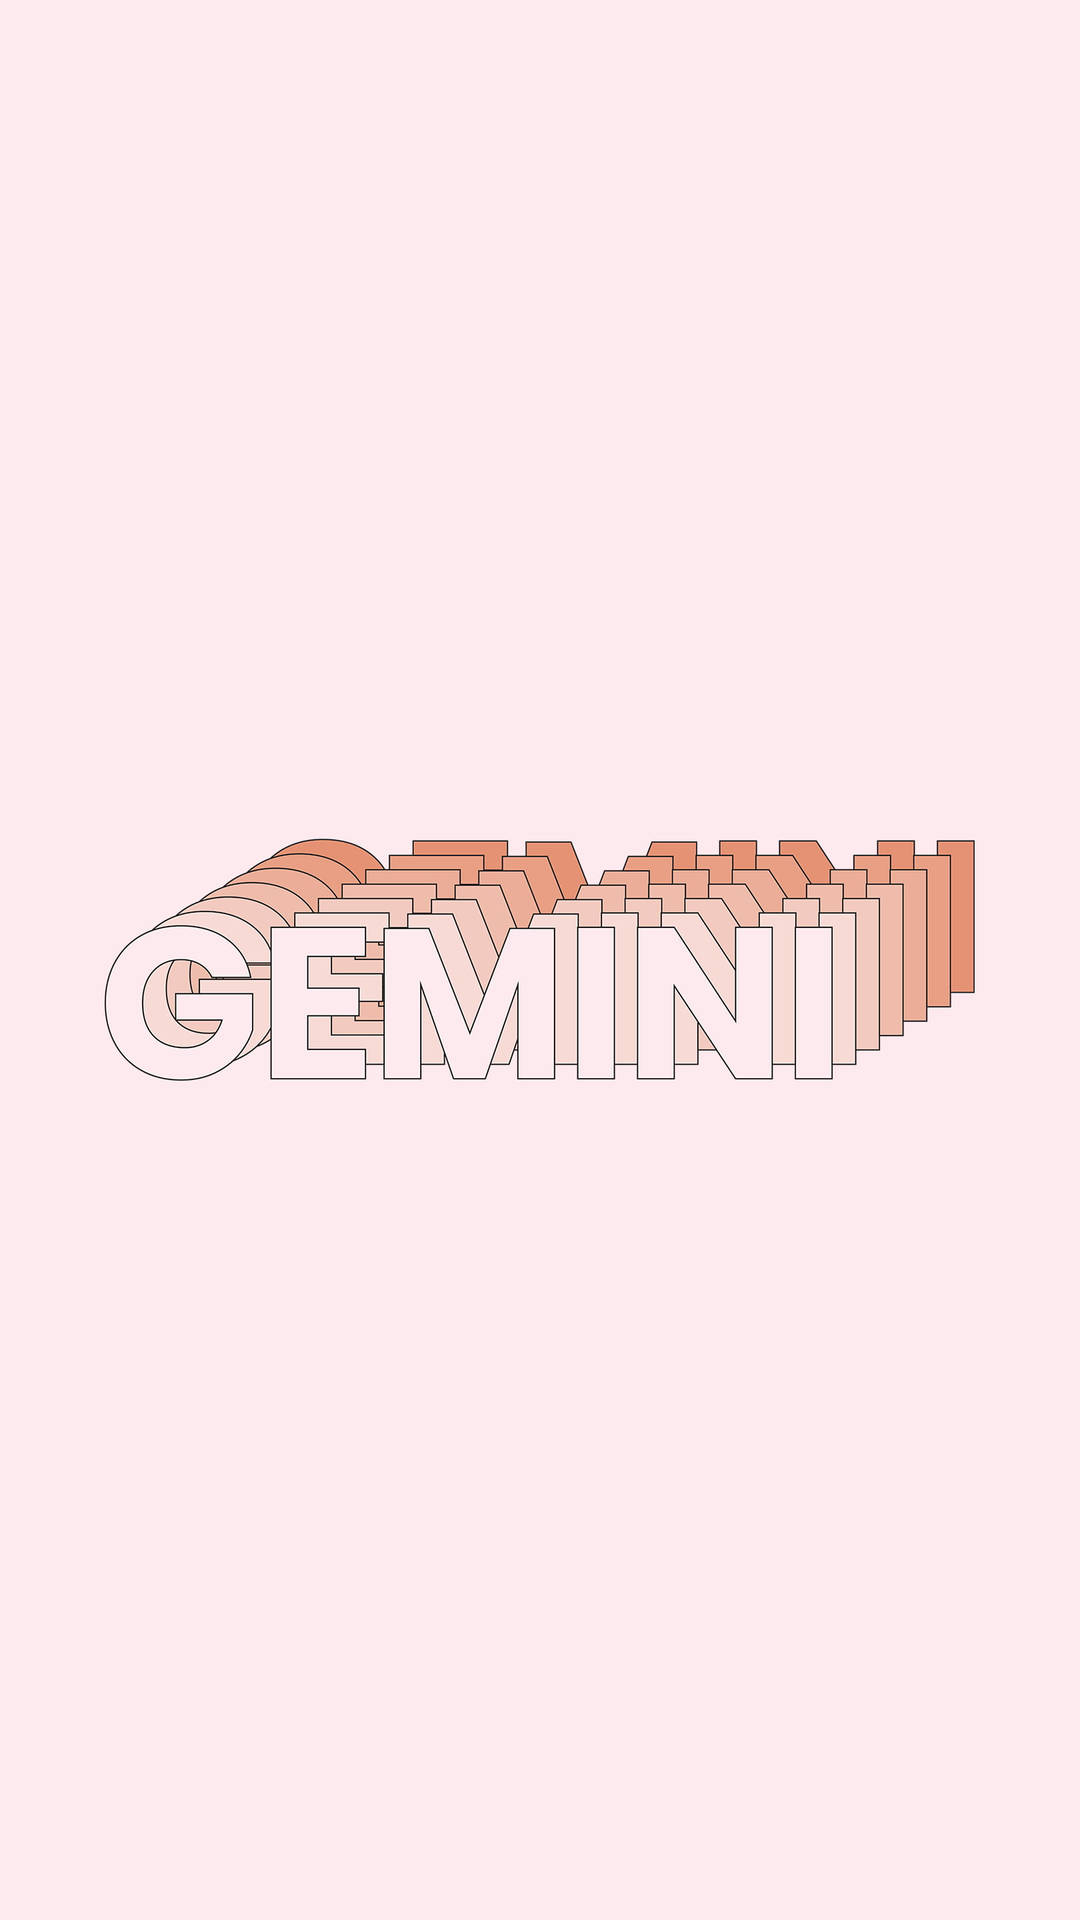 Free Gemini Zodiac Wallpaper Downloads, [100+] Gemini Zodiac Wallpapers for  FREE 